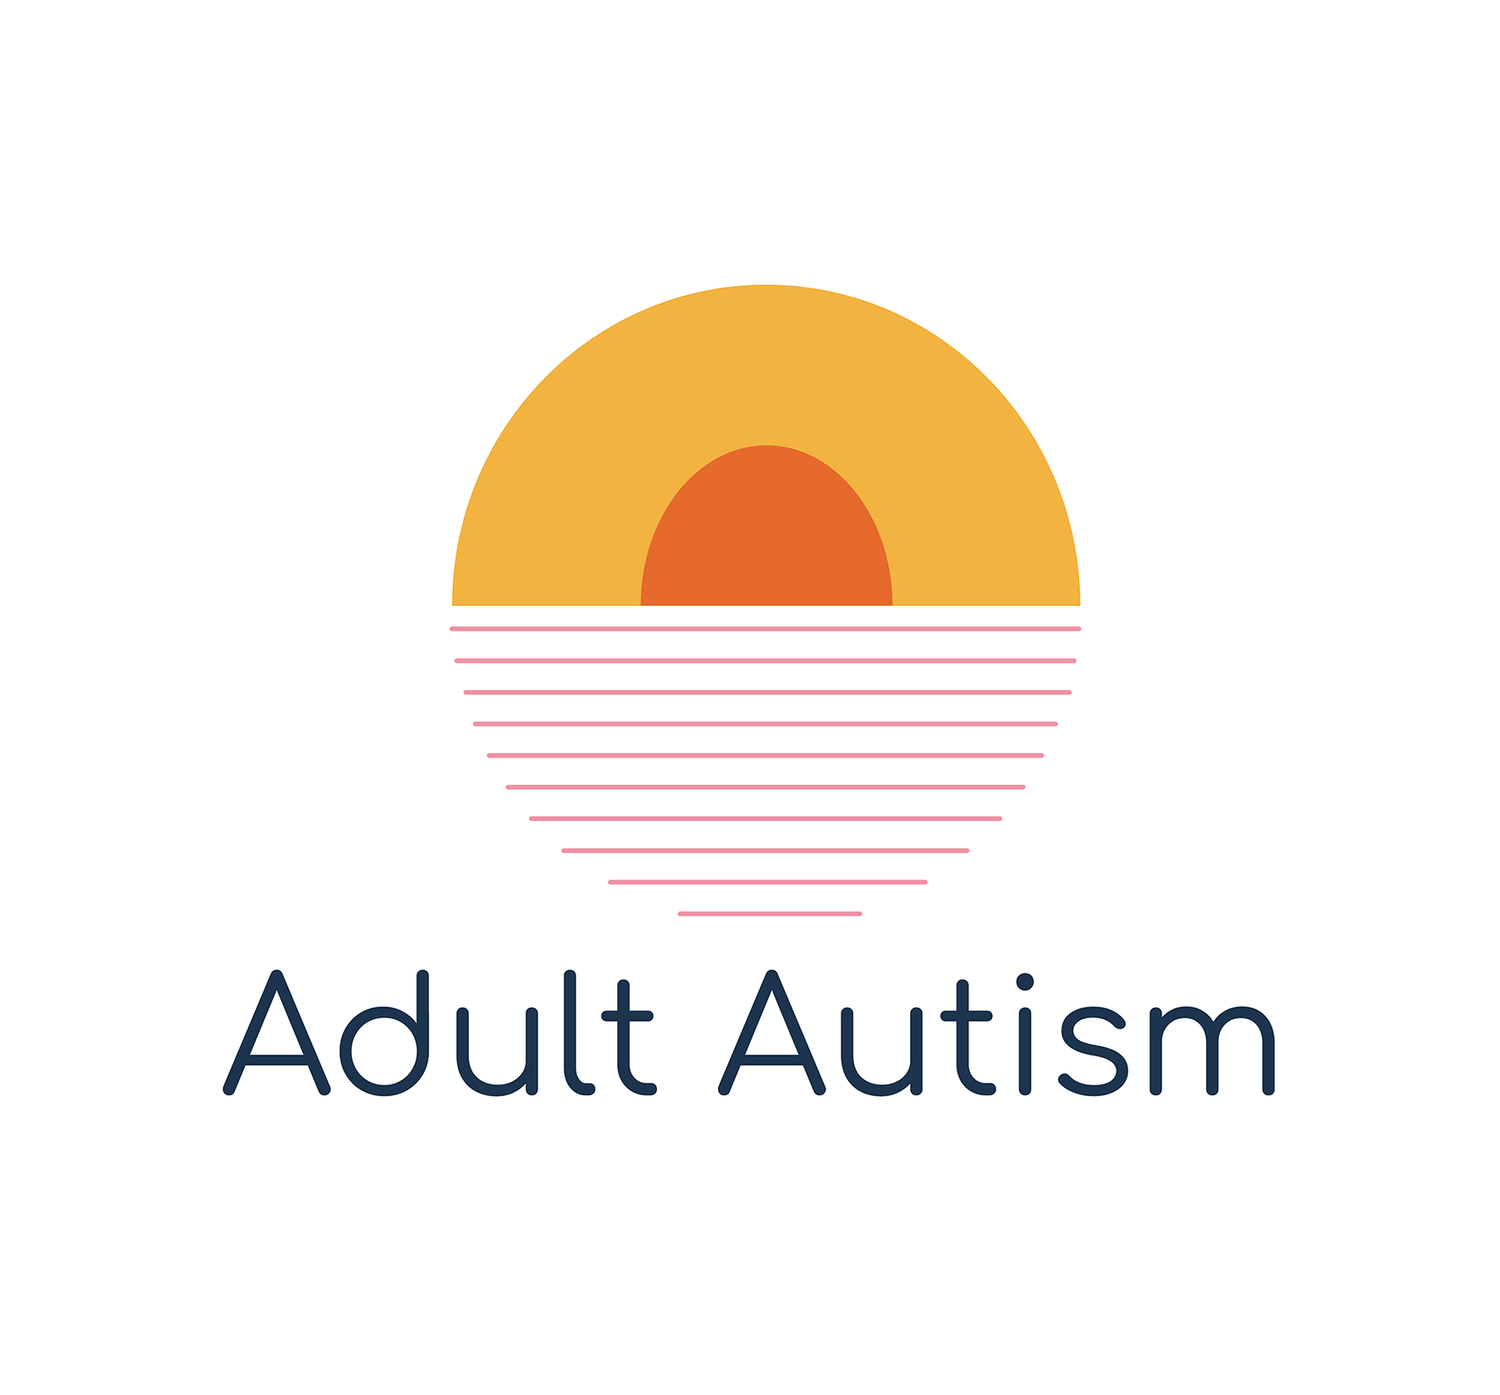 The Adult Autism Practice